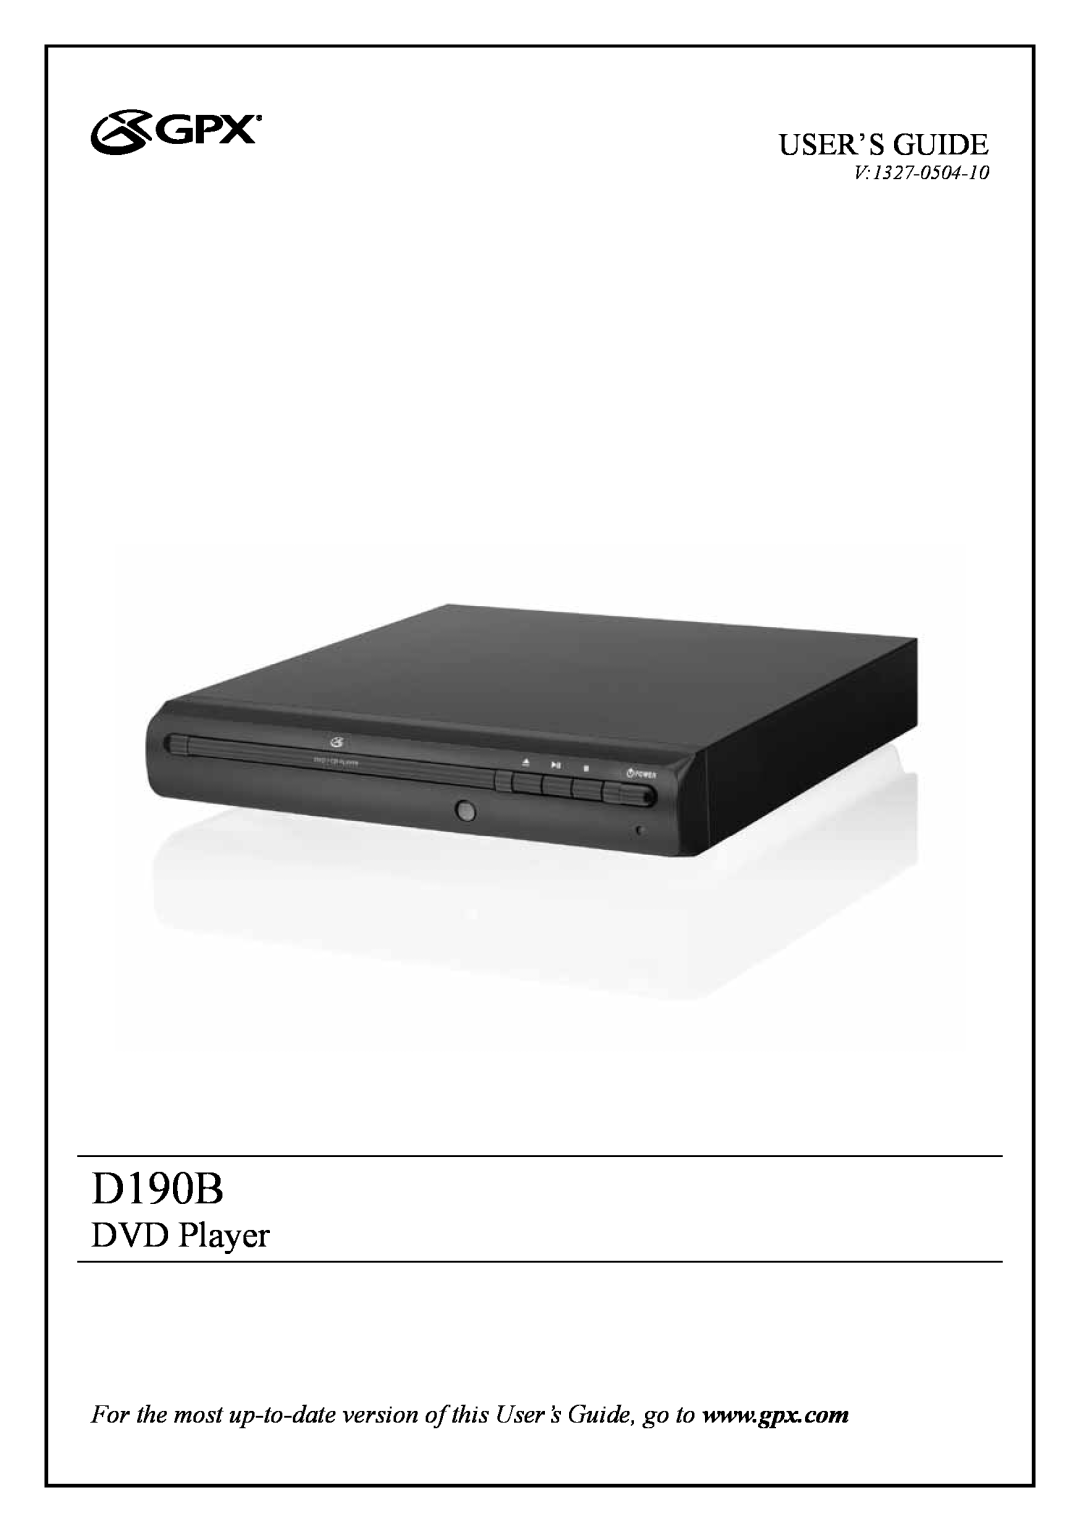 GPX D190B manual DVD Player, User’S Guide, V1327-0504-10 